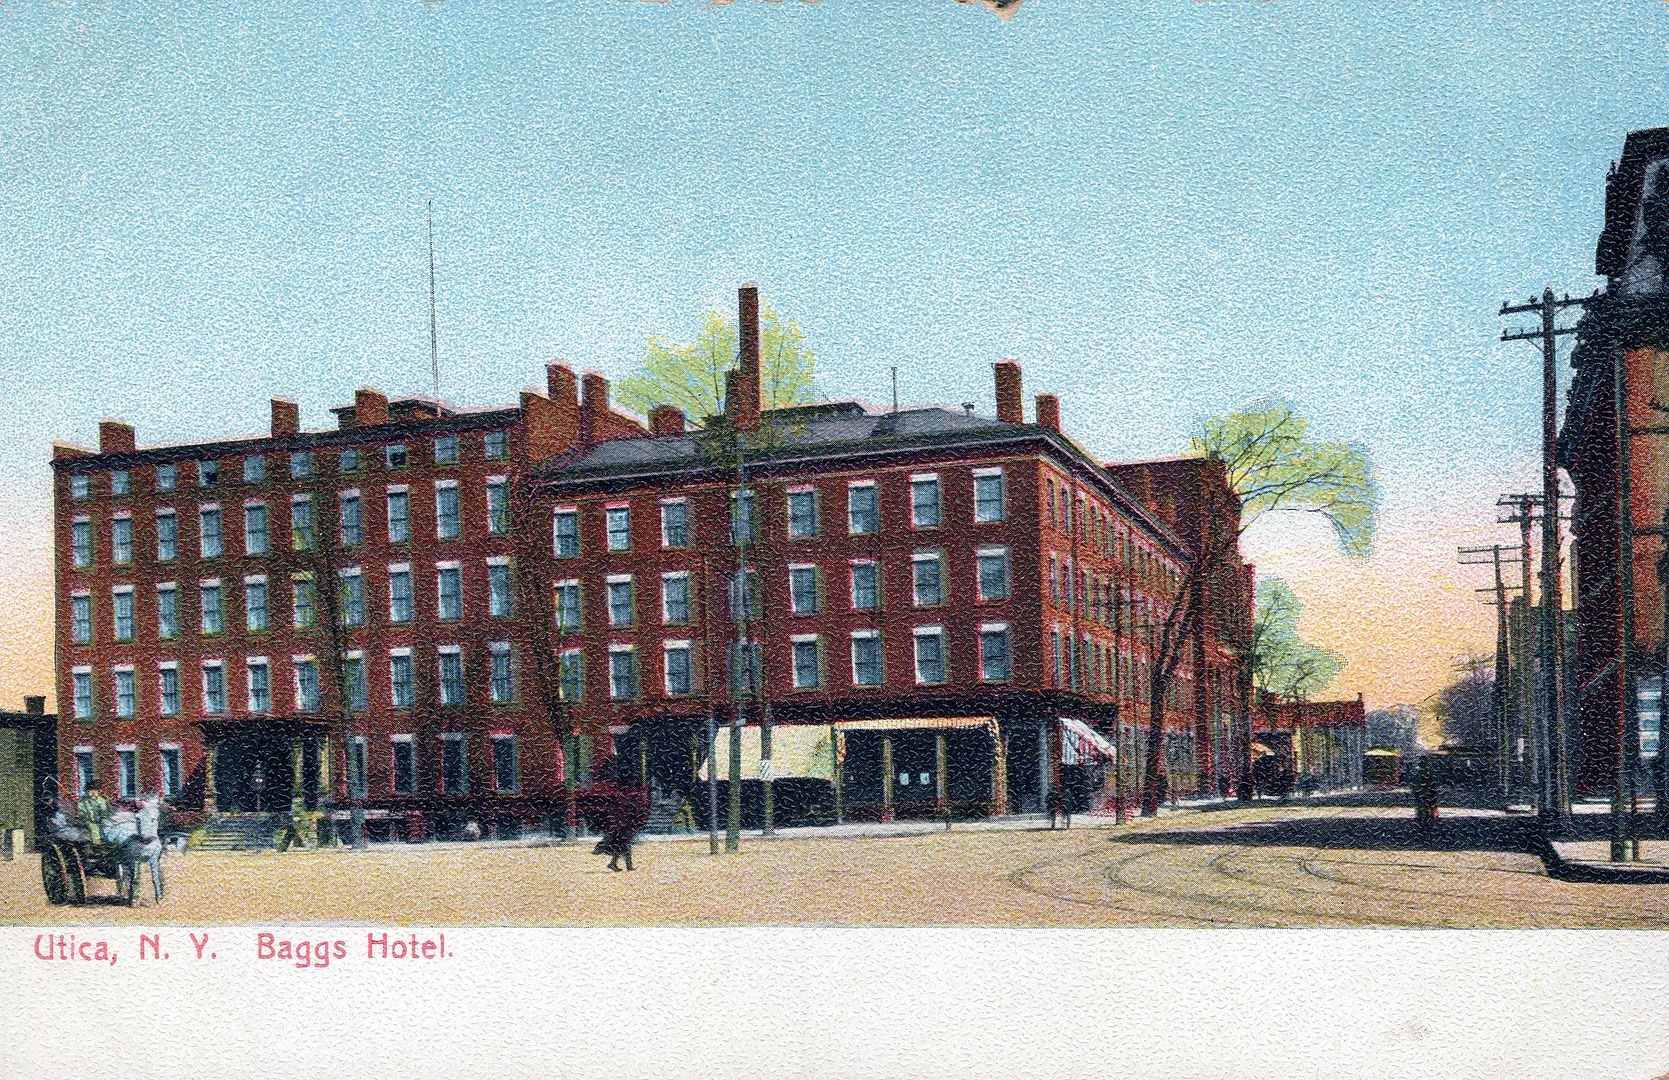 UTICA NY - Baggs Hotel Postcard - udb (pre 1908) - Picture 1 of 2